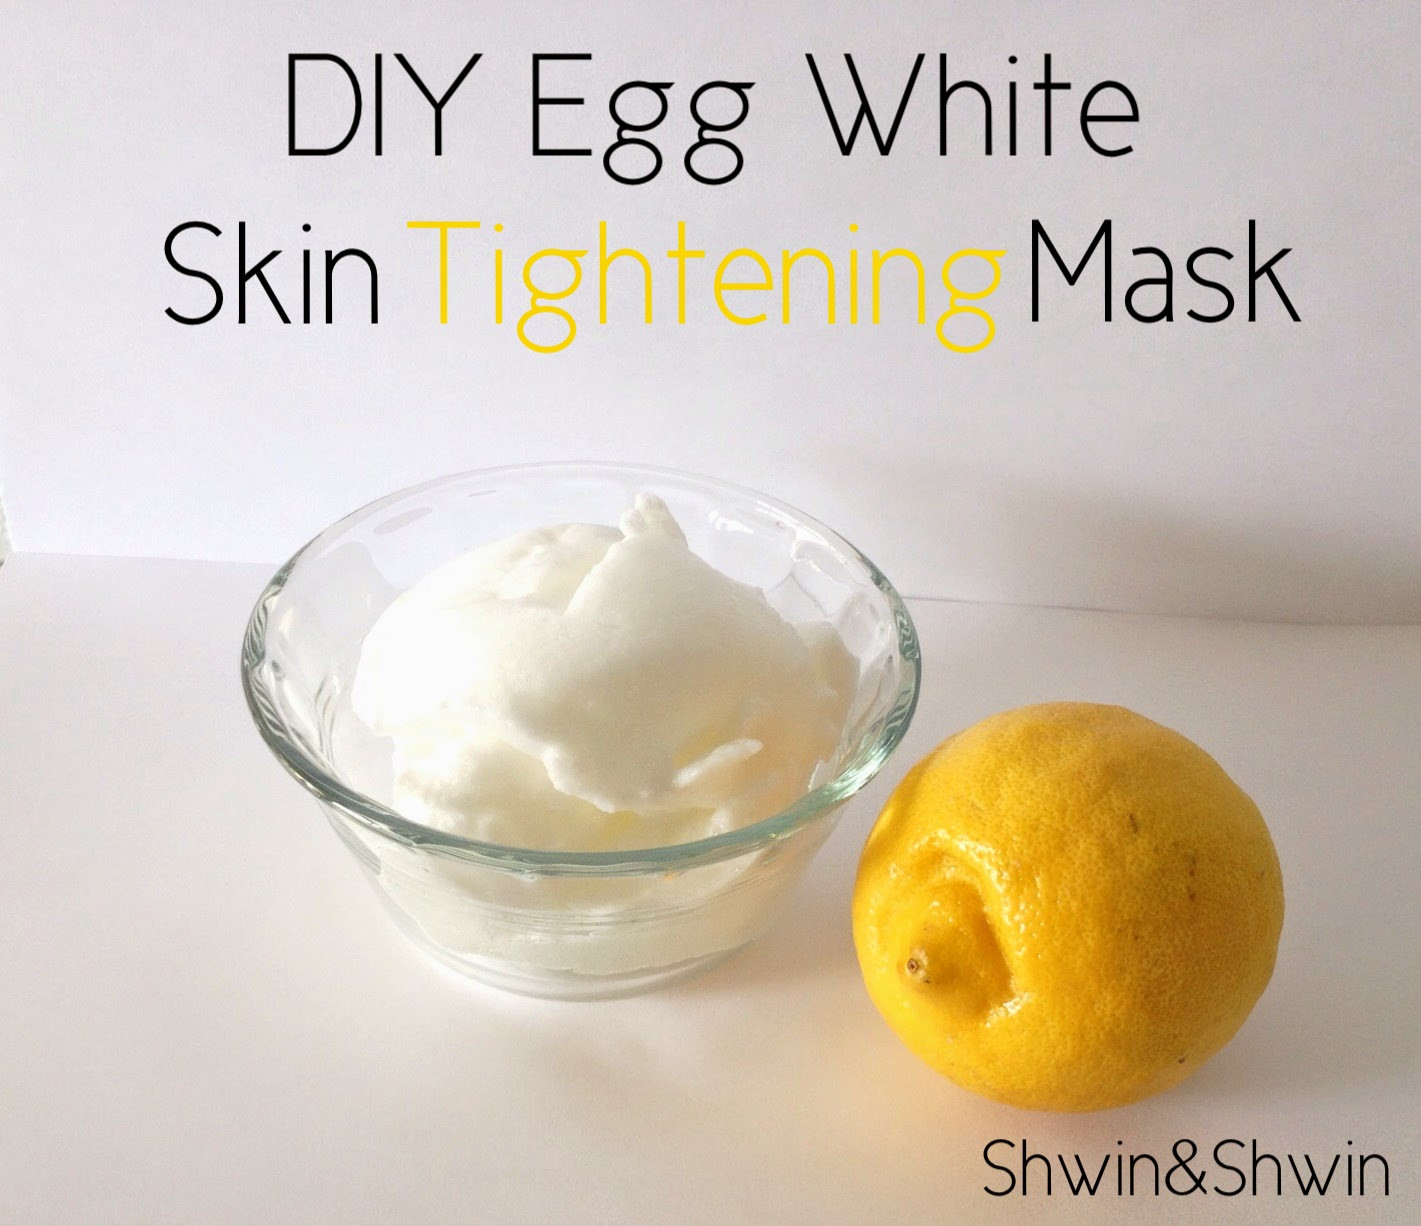 DIY Egg White Mask
 DIY Egg White Skin Tightening Mask Shwin and Shwin